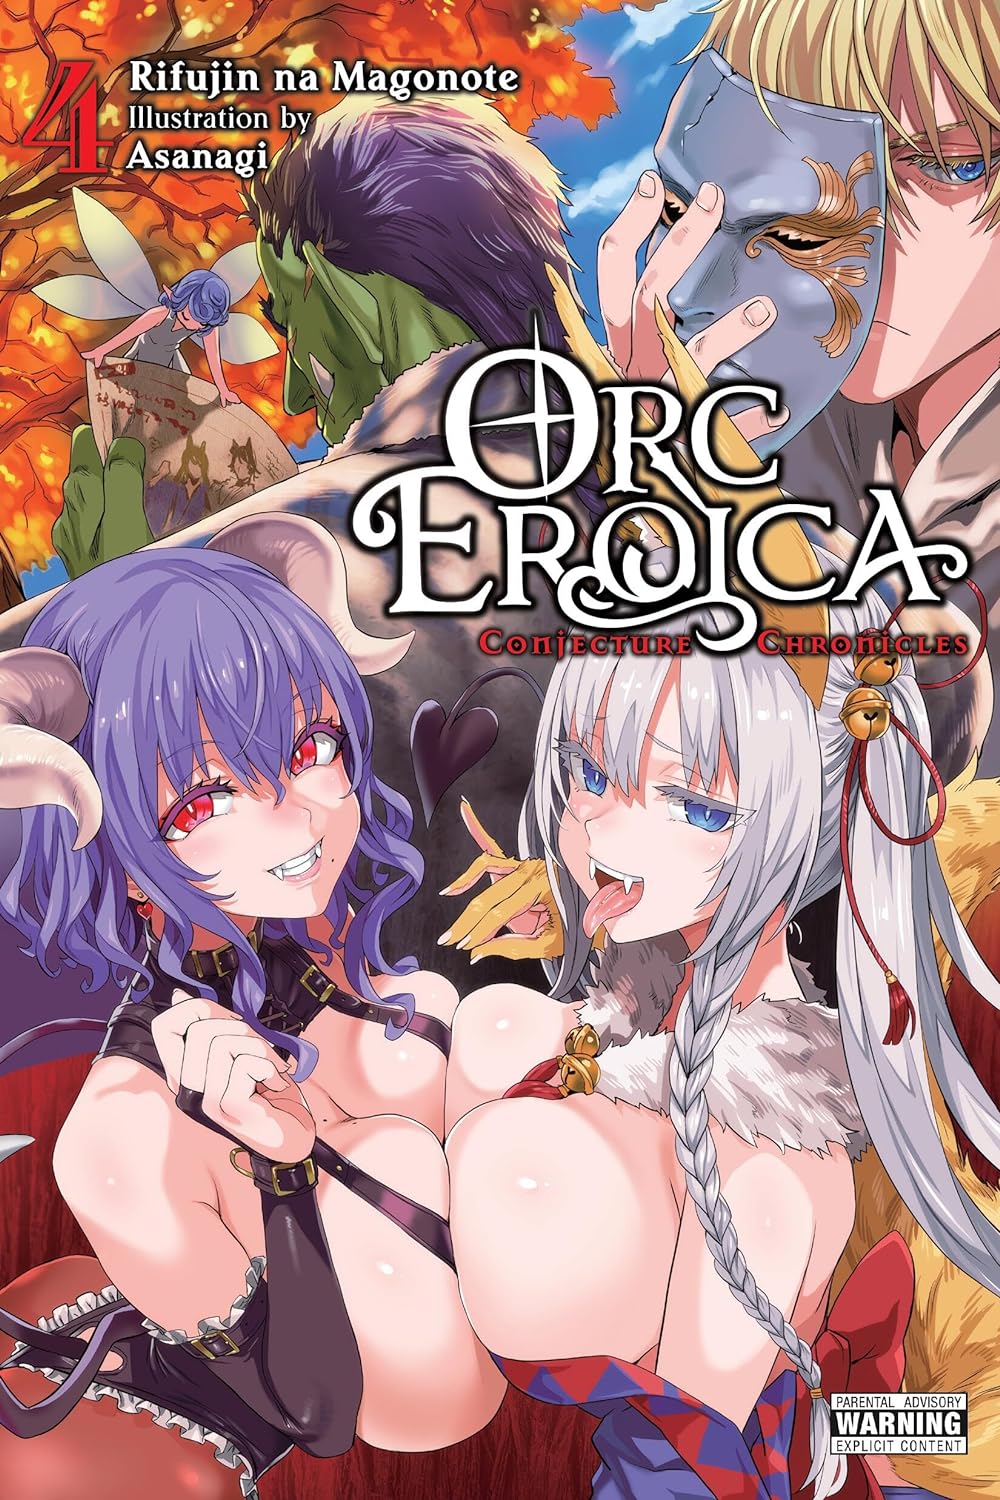 (26/03/2024) Orc Eroica Vol. 04 (Light Novel): Conjecture Chronicles